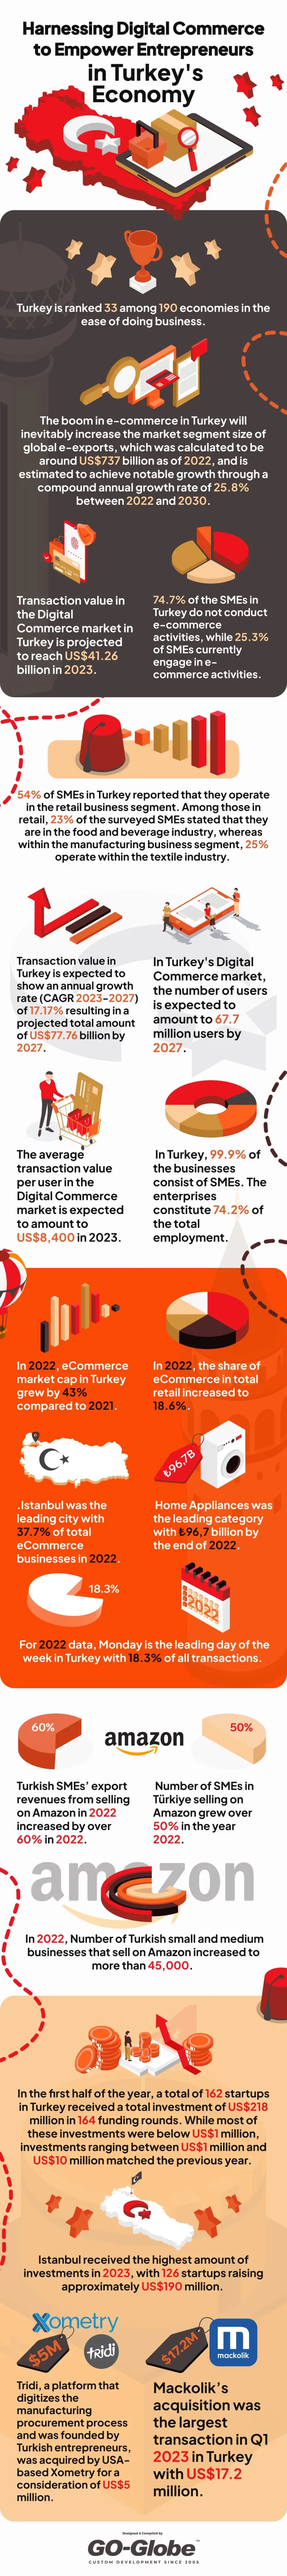 Harnessing Digital Commerce to Empower Entrepreneurs in Turkey's Economy